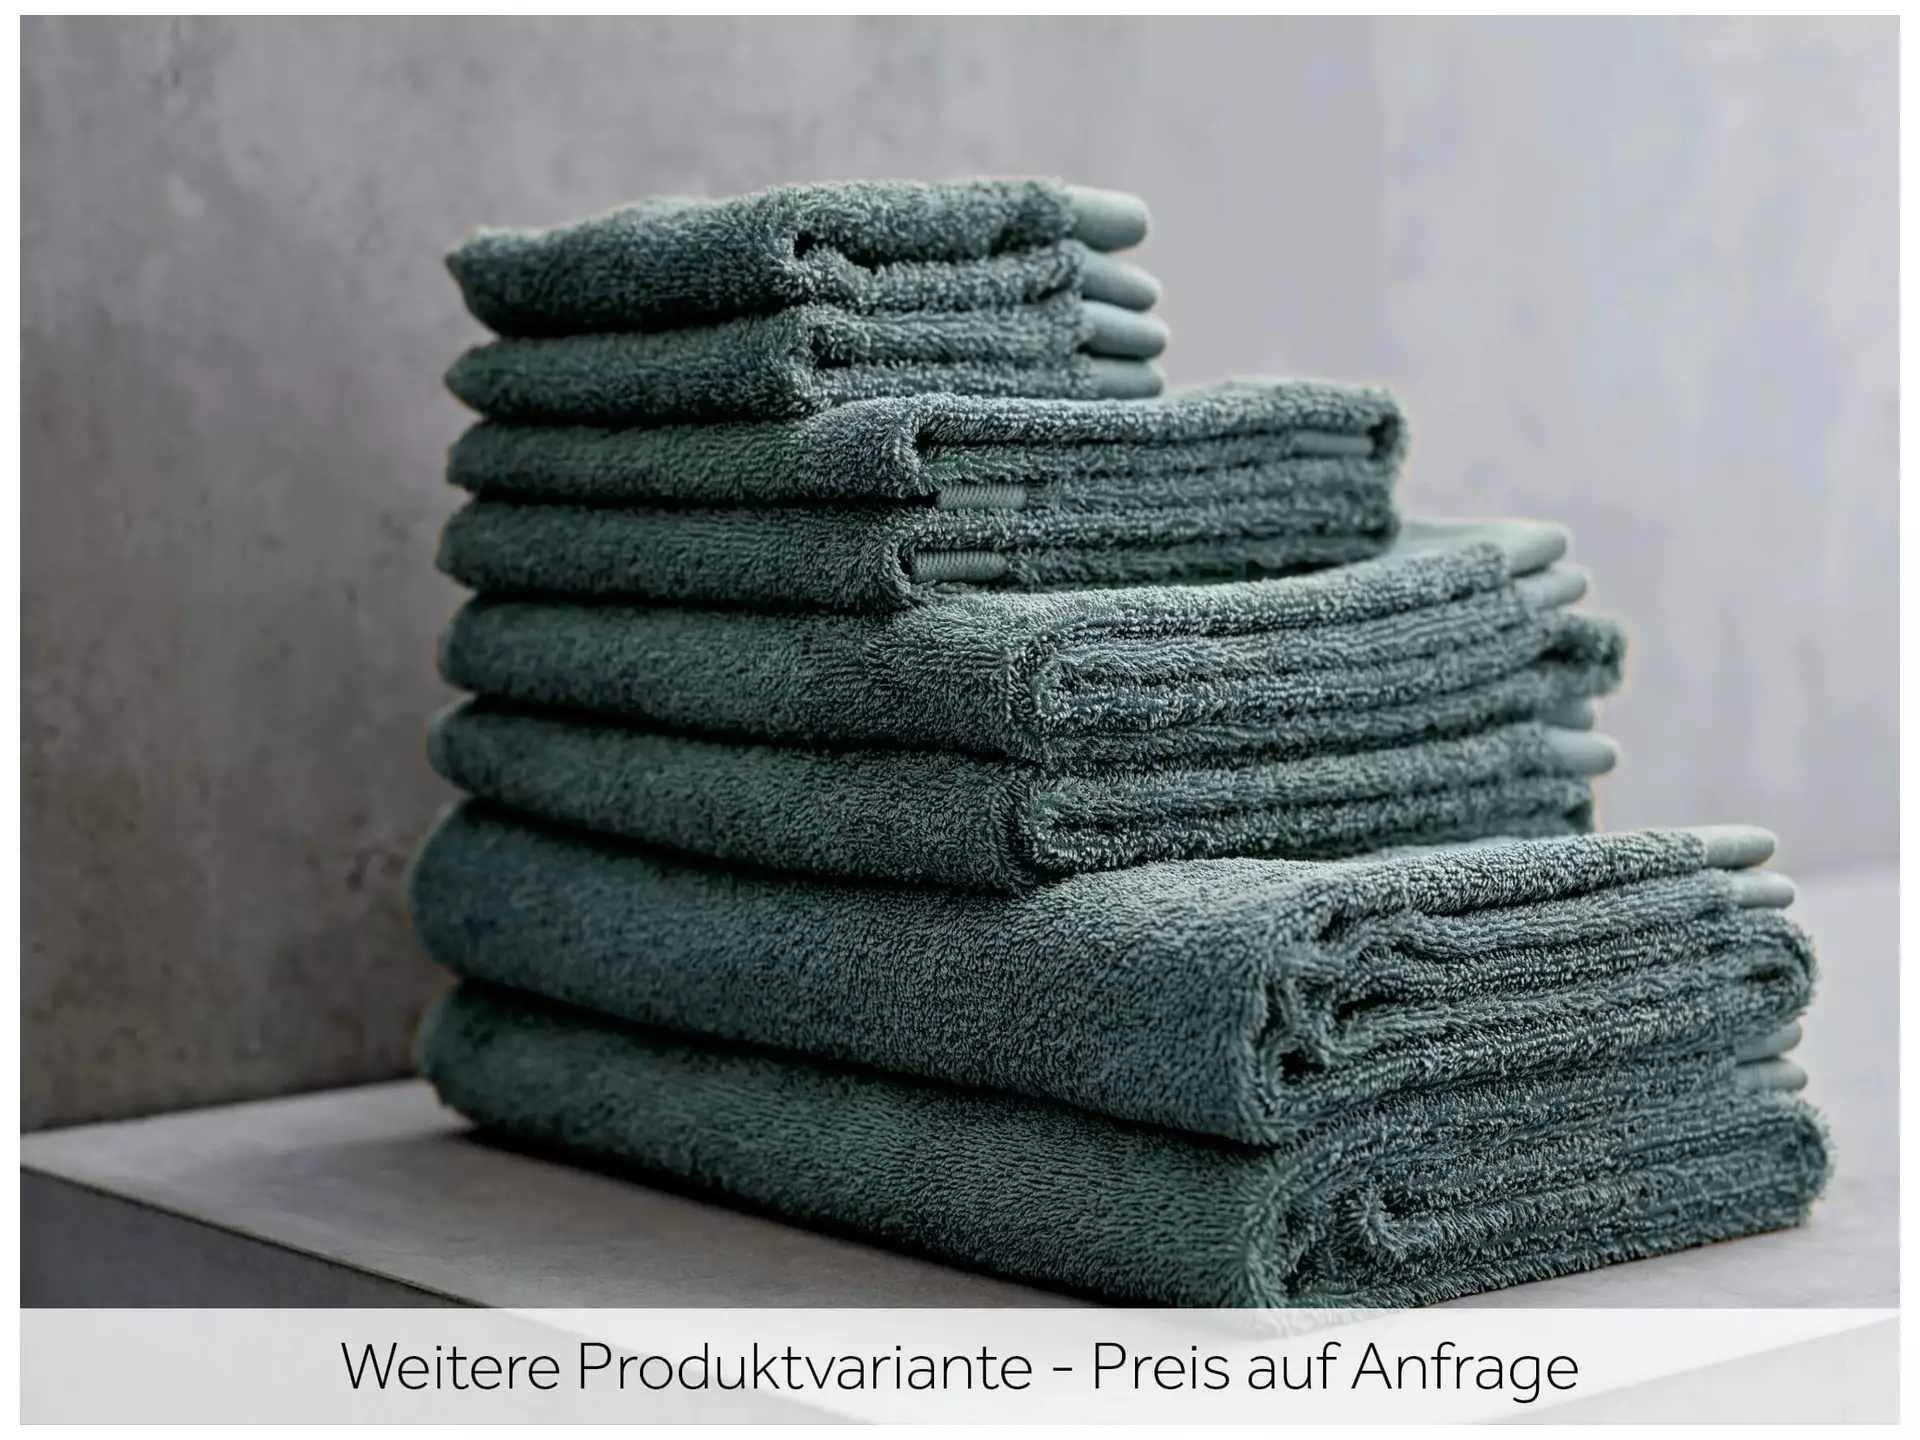 Handtuch Comfort 50 x 100 cm, Hellgrün Alltron / Farbe: Hellgrün